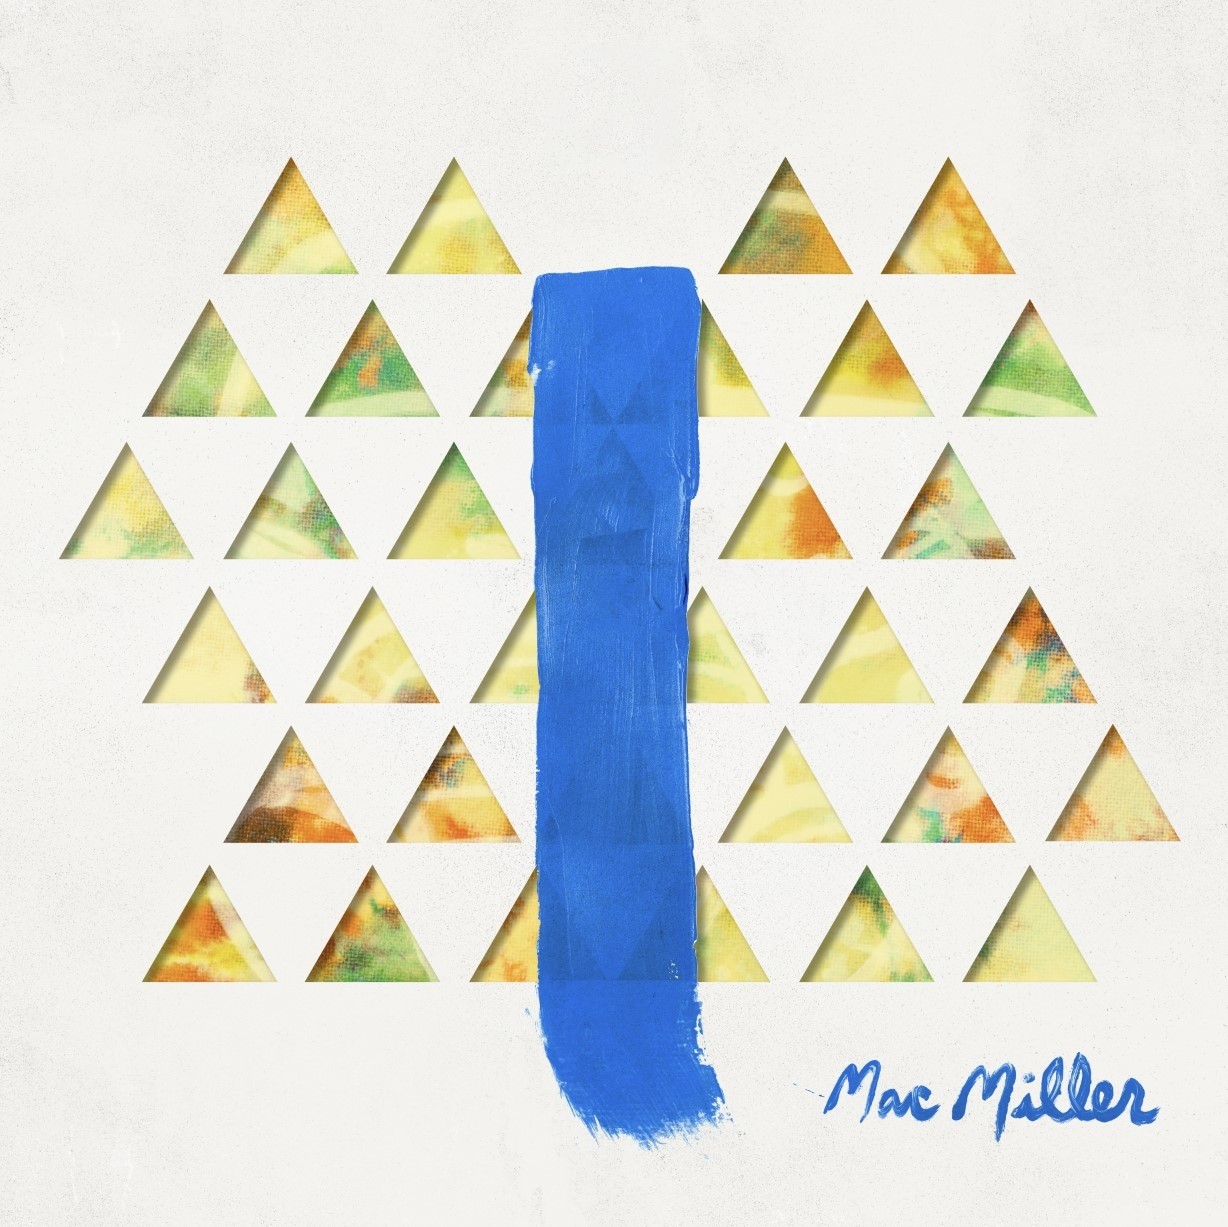 Mac Miller - Blue Slide Park [10th Anniversary]